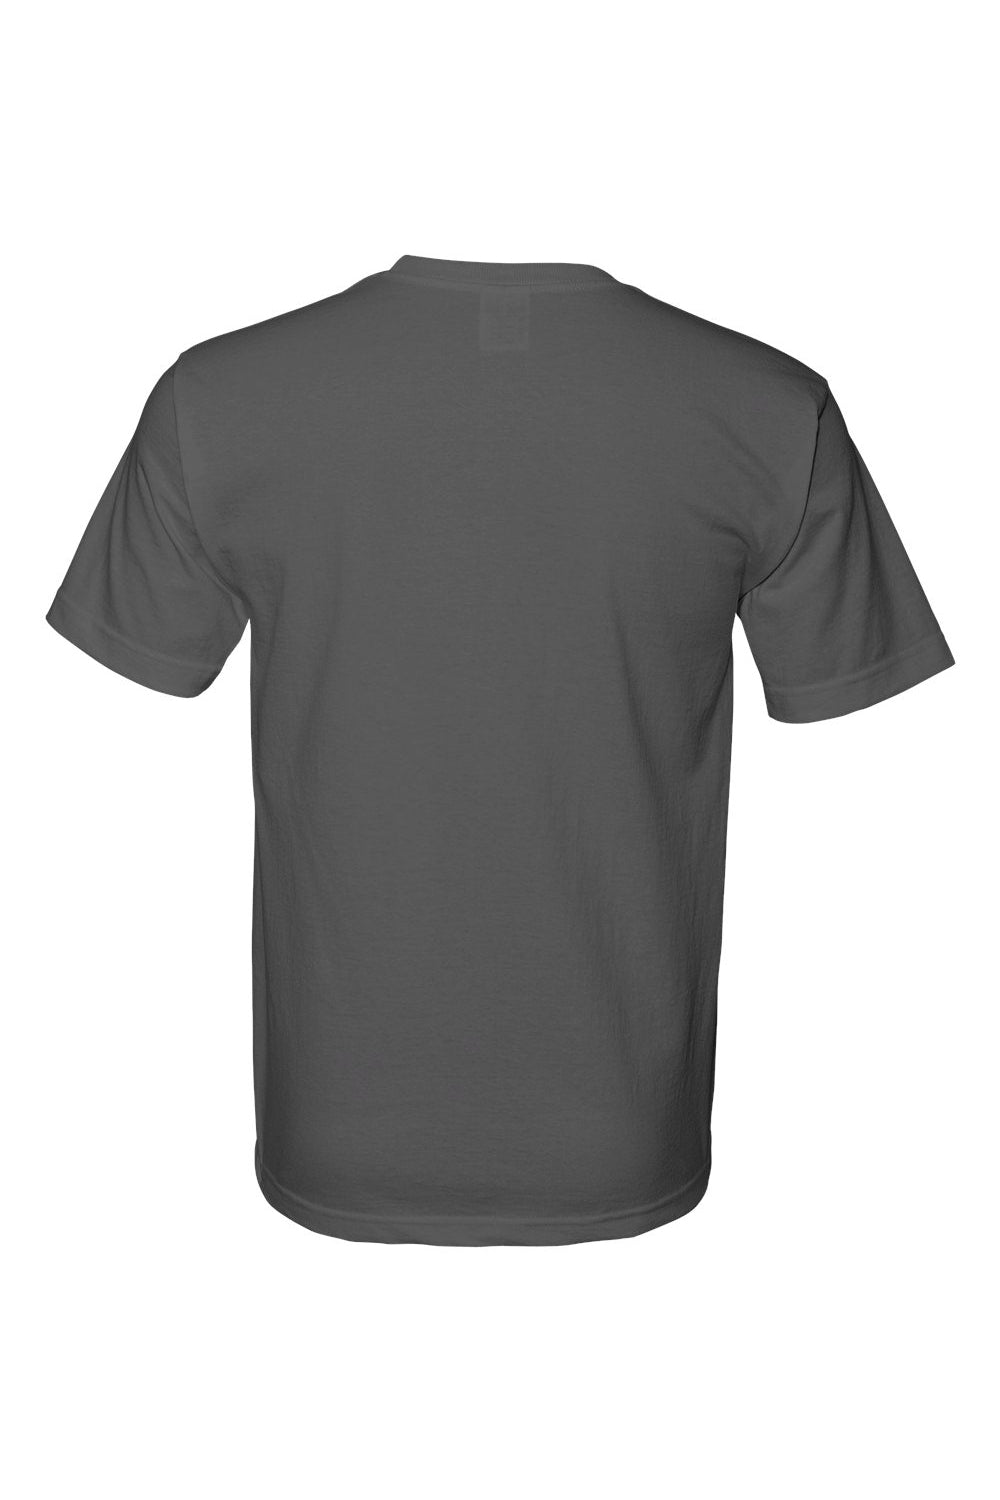 Bayside BA5040 Mens USA Made Short Sleeve Crewneck T-Shirt Charcoal Grey Flat Back